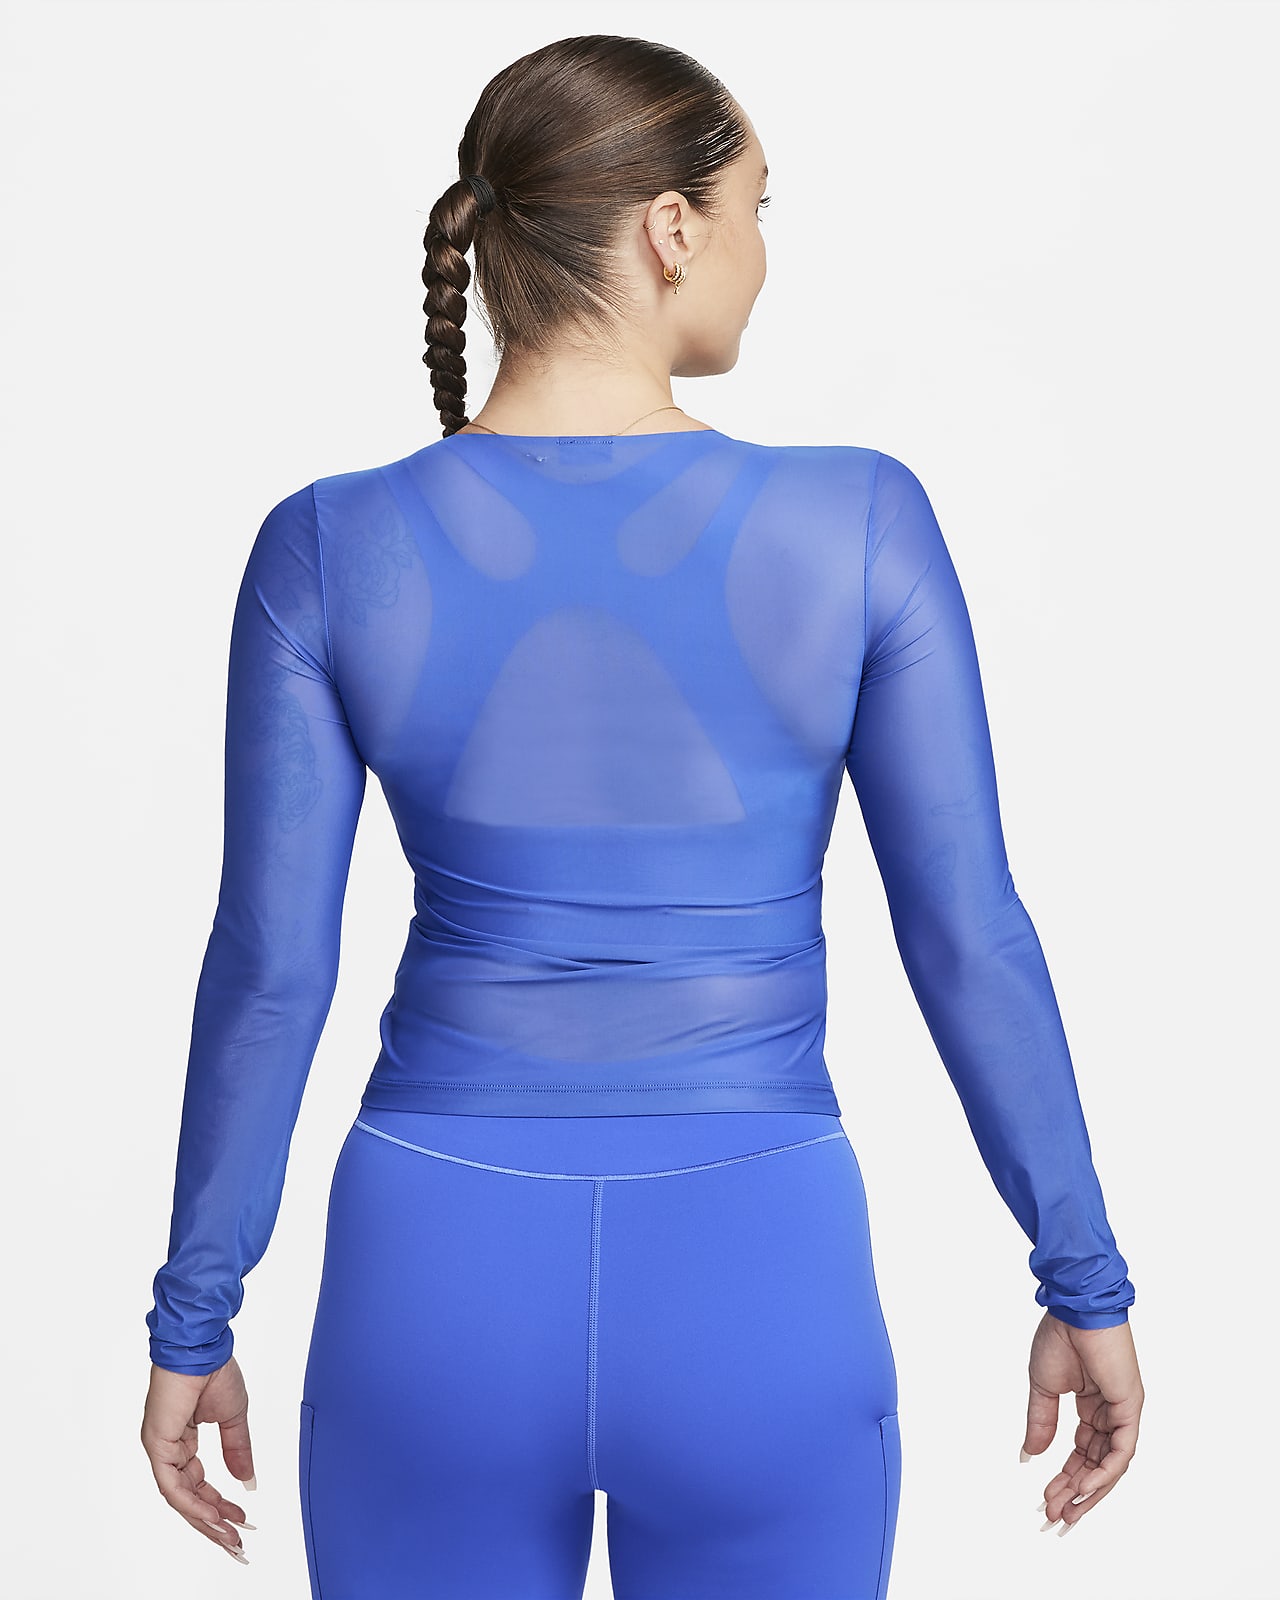 Nike FutureMove Women's Dri-FIT Long-Sleeve Sheer Top